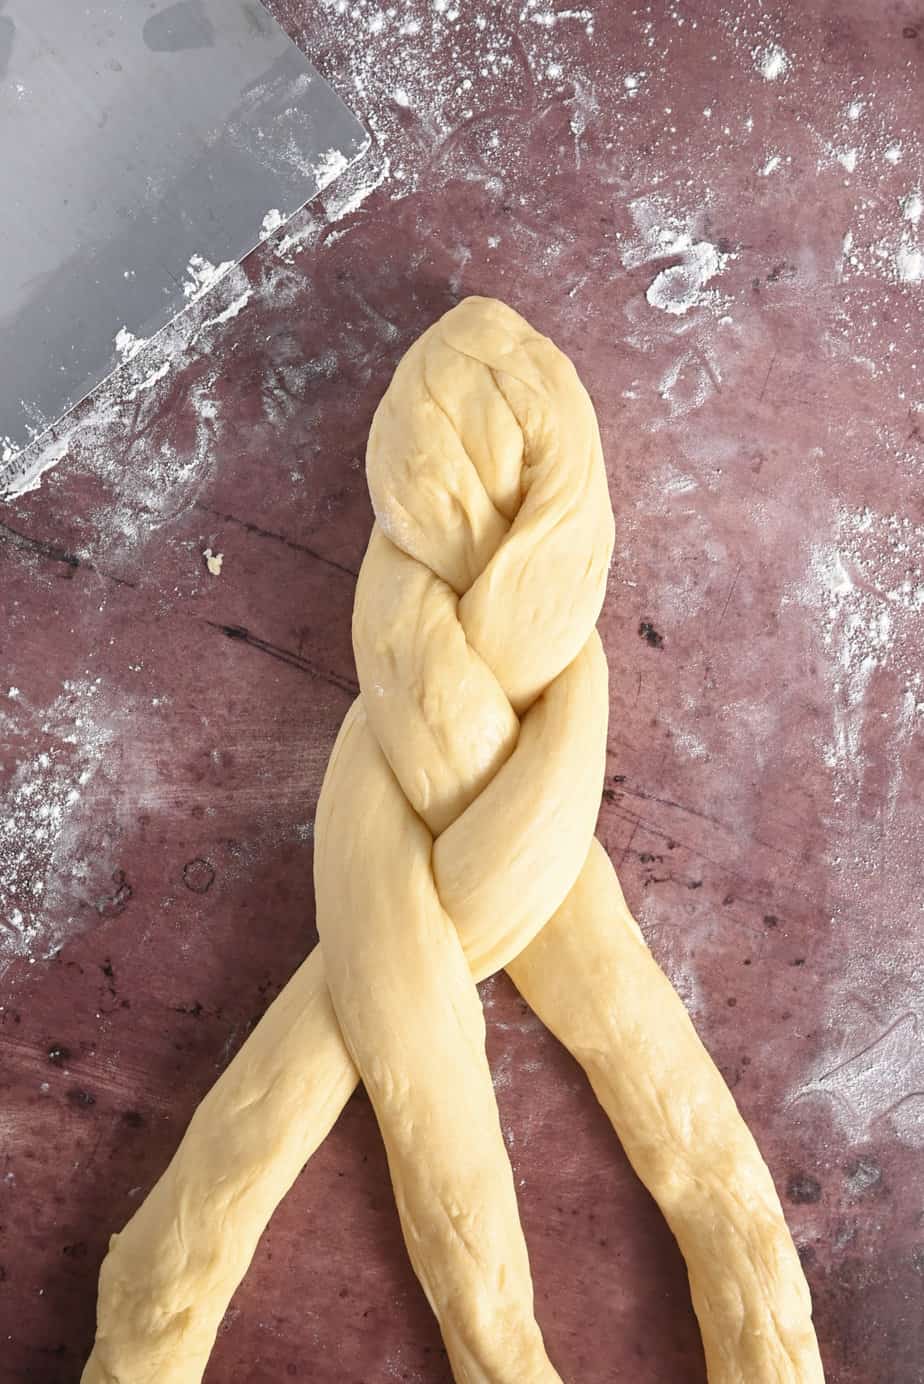 Pan de muerto dough being braided on a floured surface.